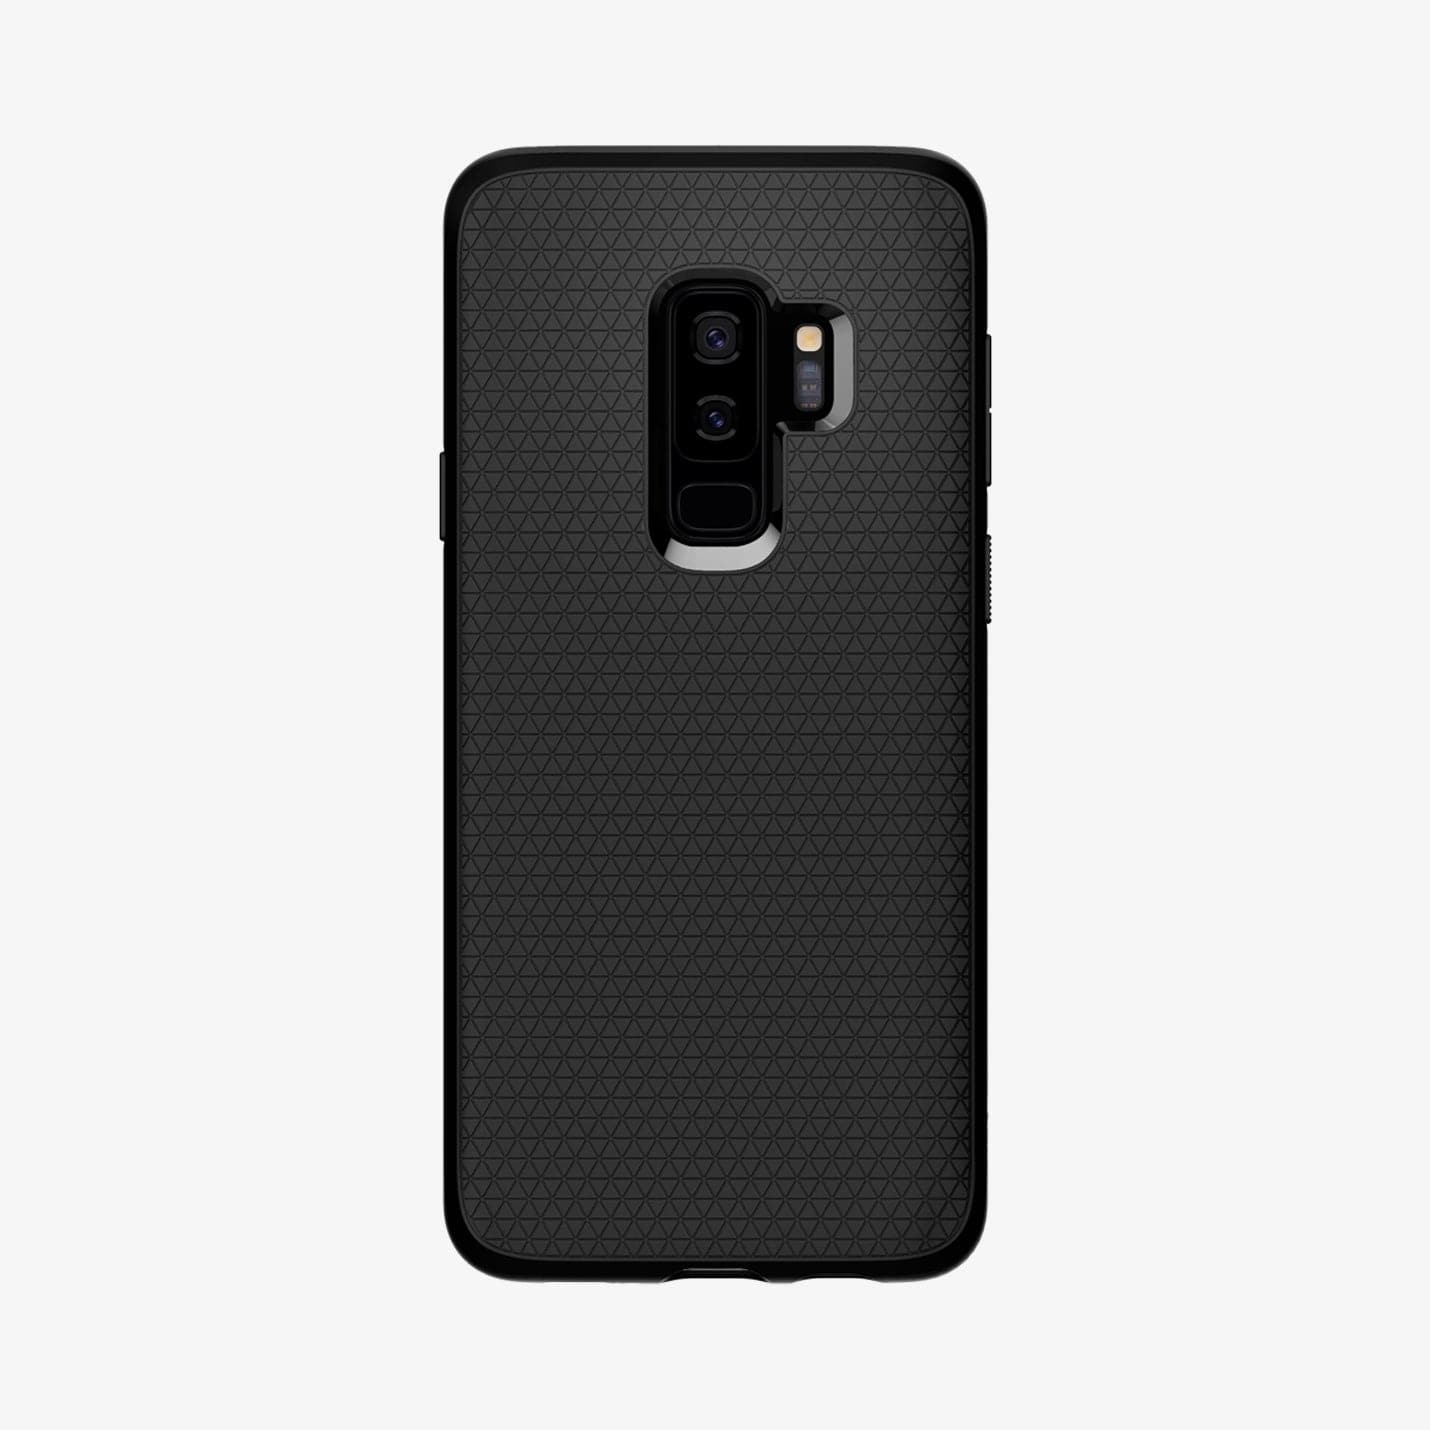 593CS22920 - Galaxy S9 Plus Liquid Air Case in matte black showing the back